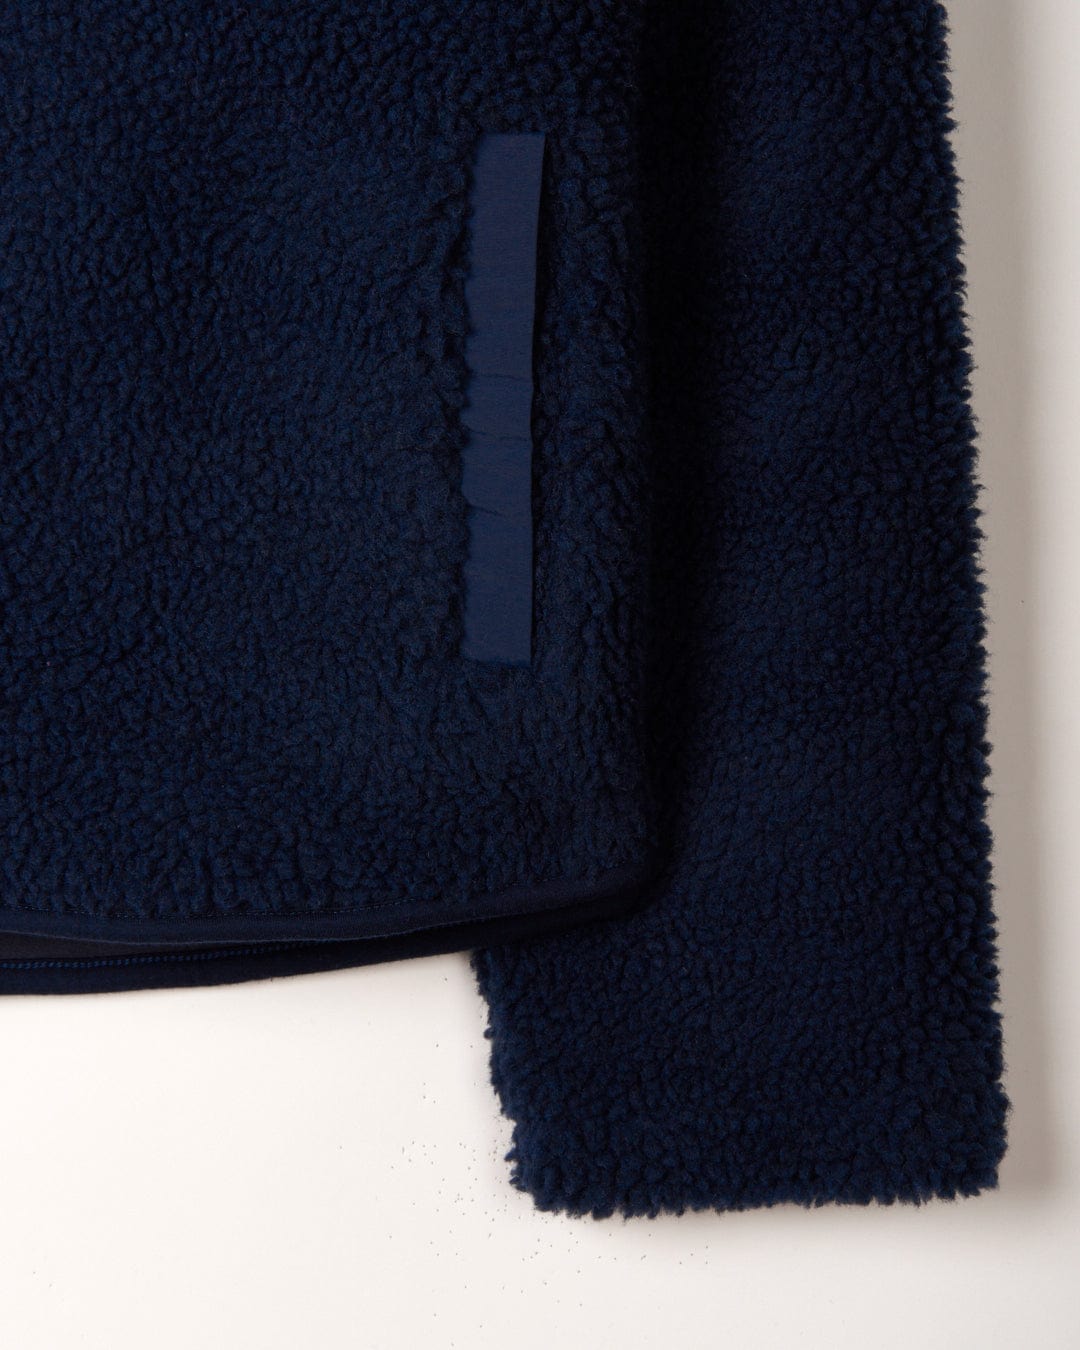 A cozy Zella - Womens 1/4 Neck Fleece - Dark Blue material in a close up of a Saltrock towel.